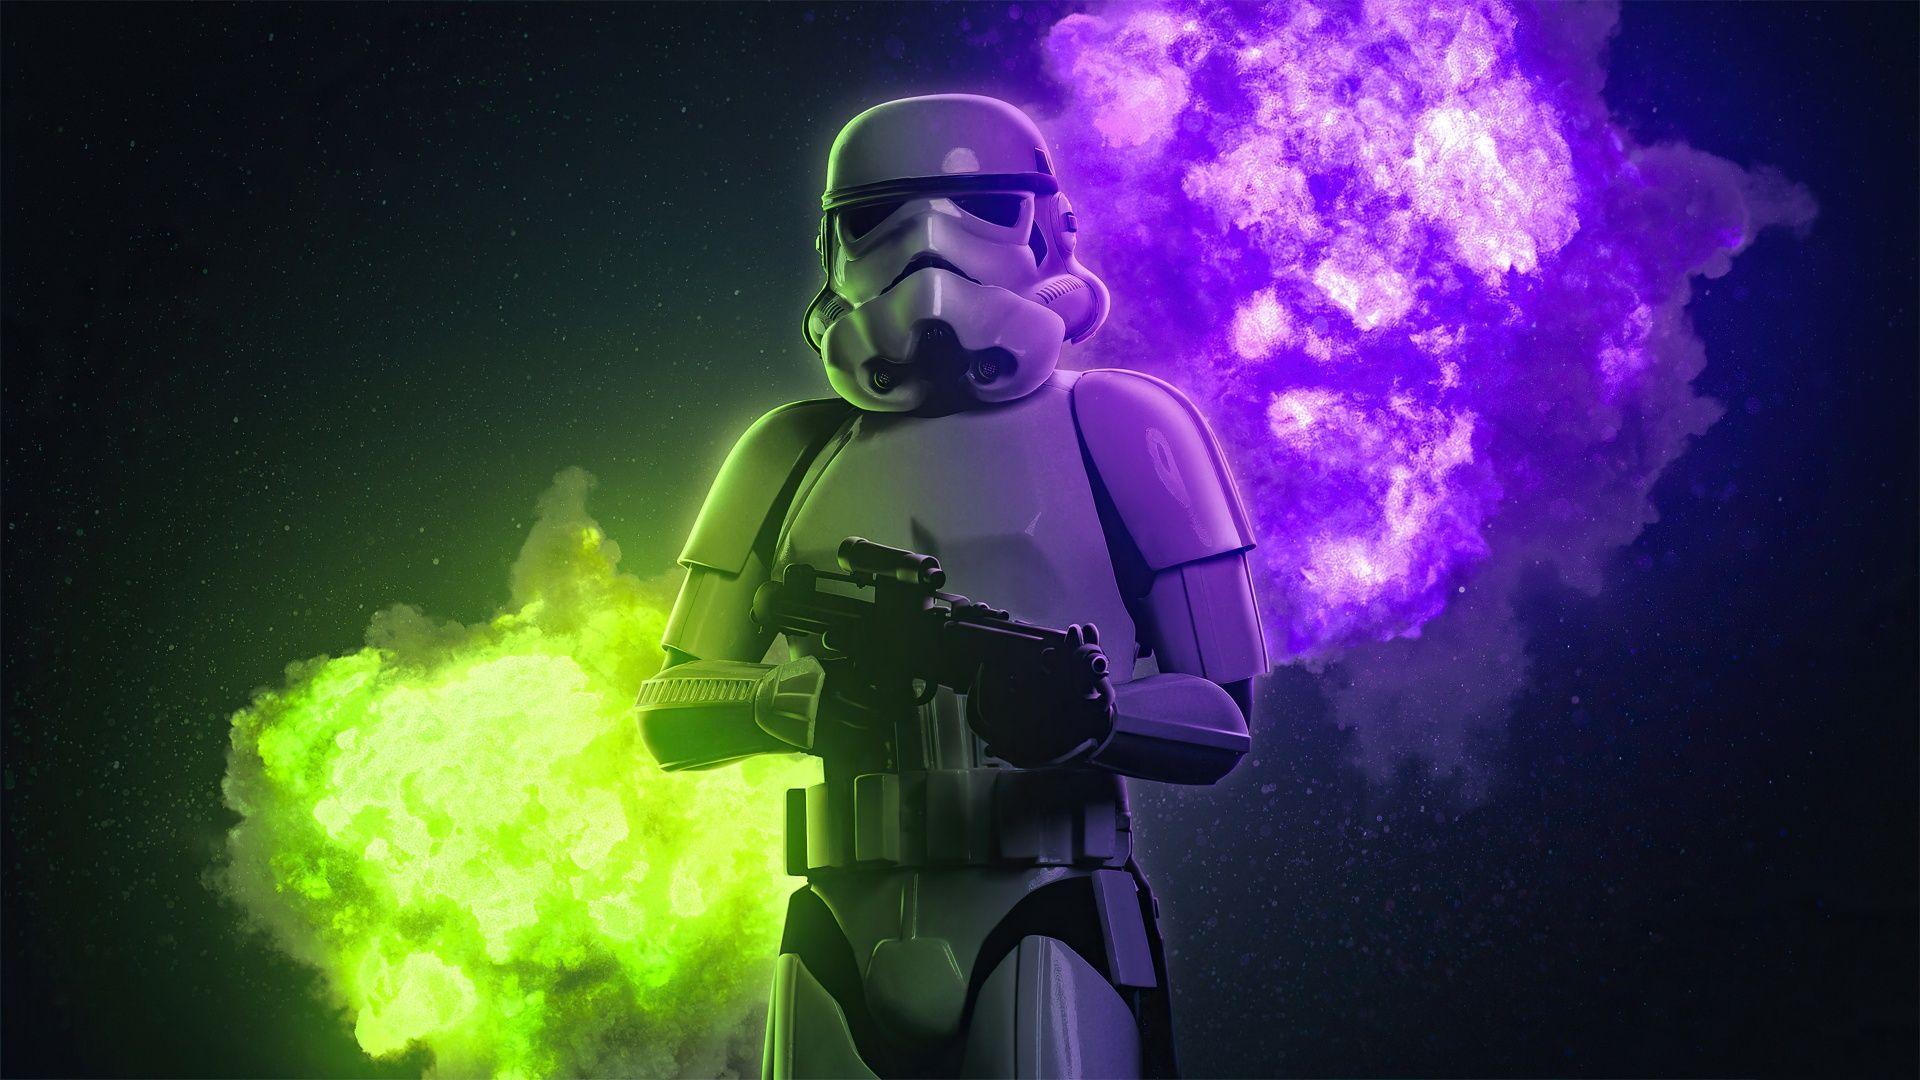 4k Star Wars Wallpapers Top Free 4k Star Wars Backgrounds